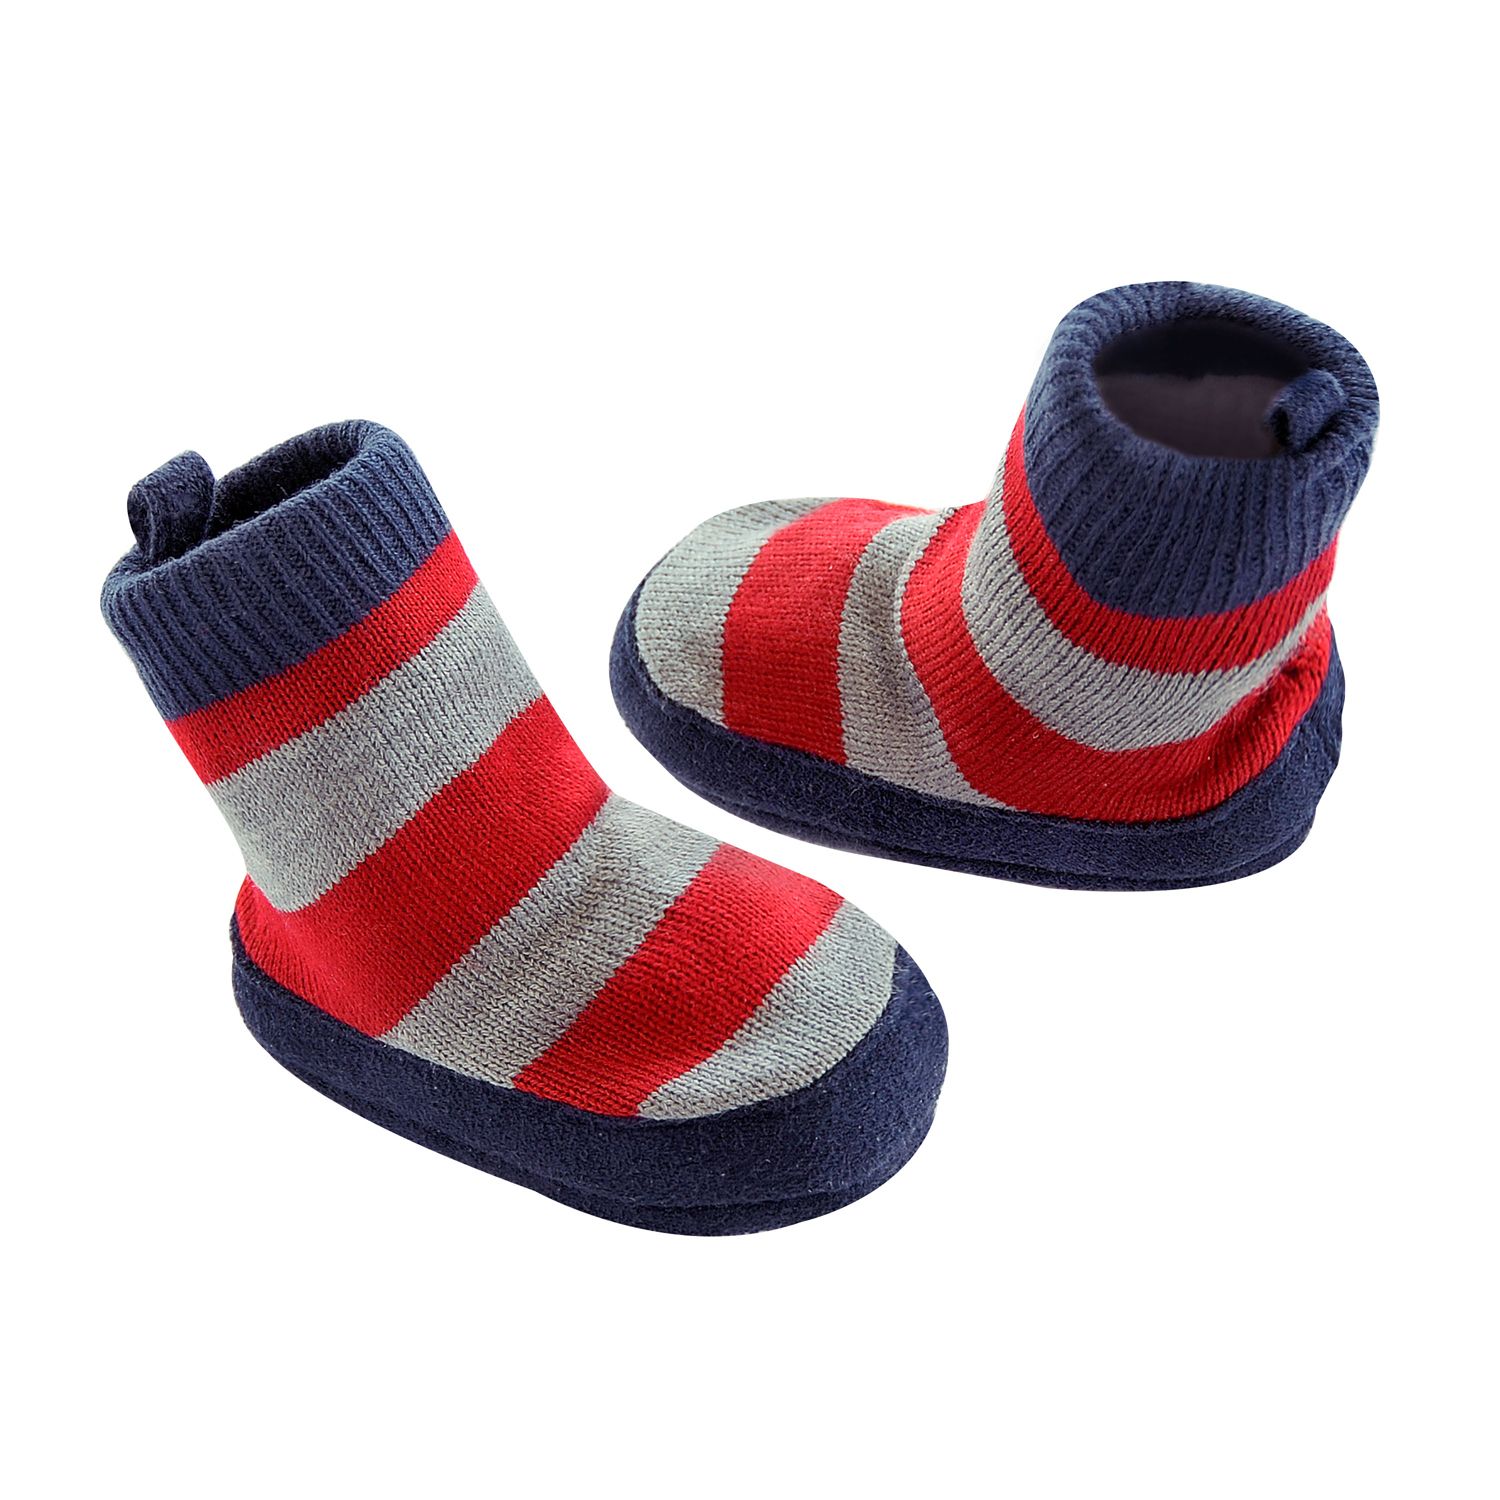 slipper for baby boy